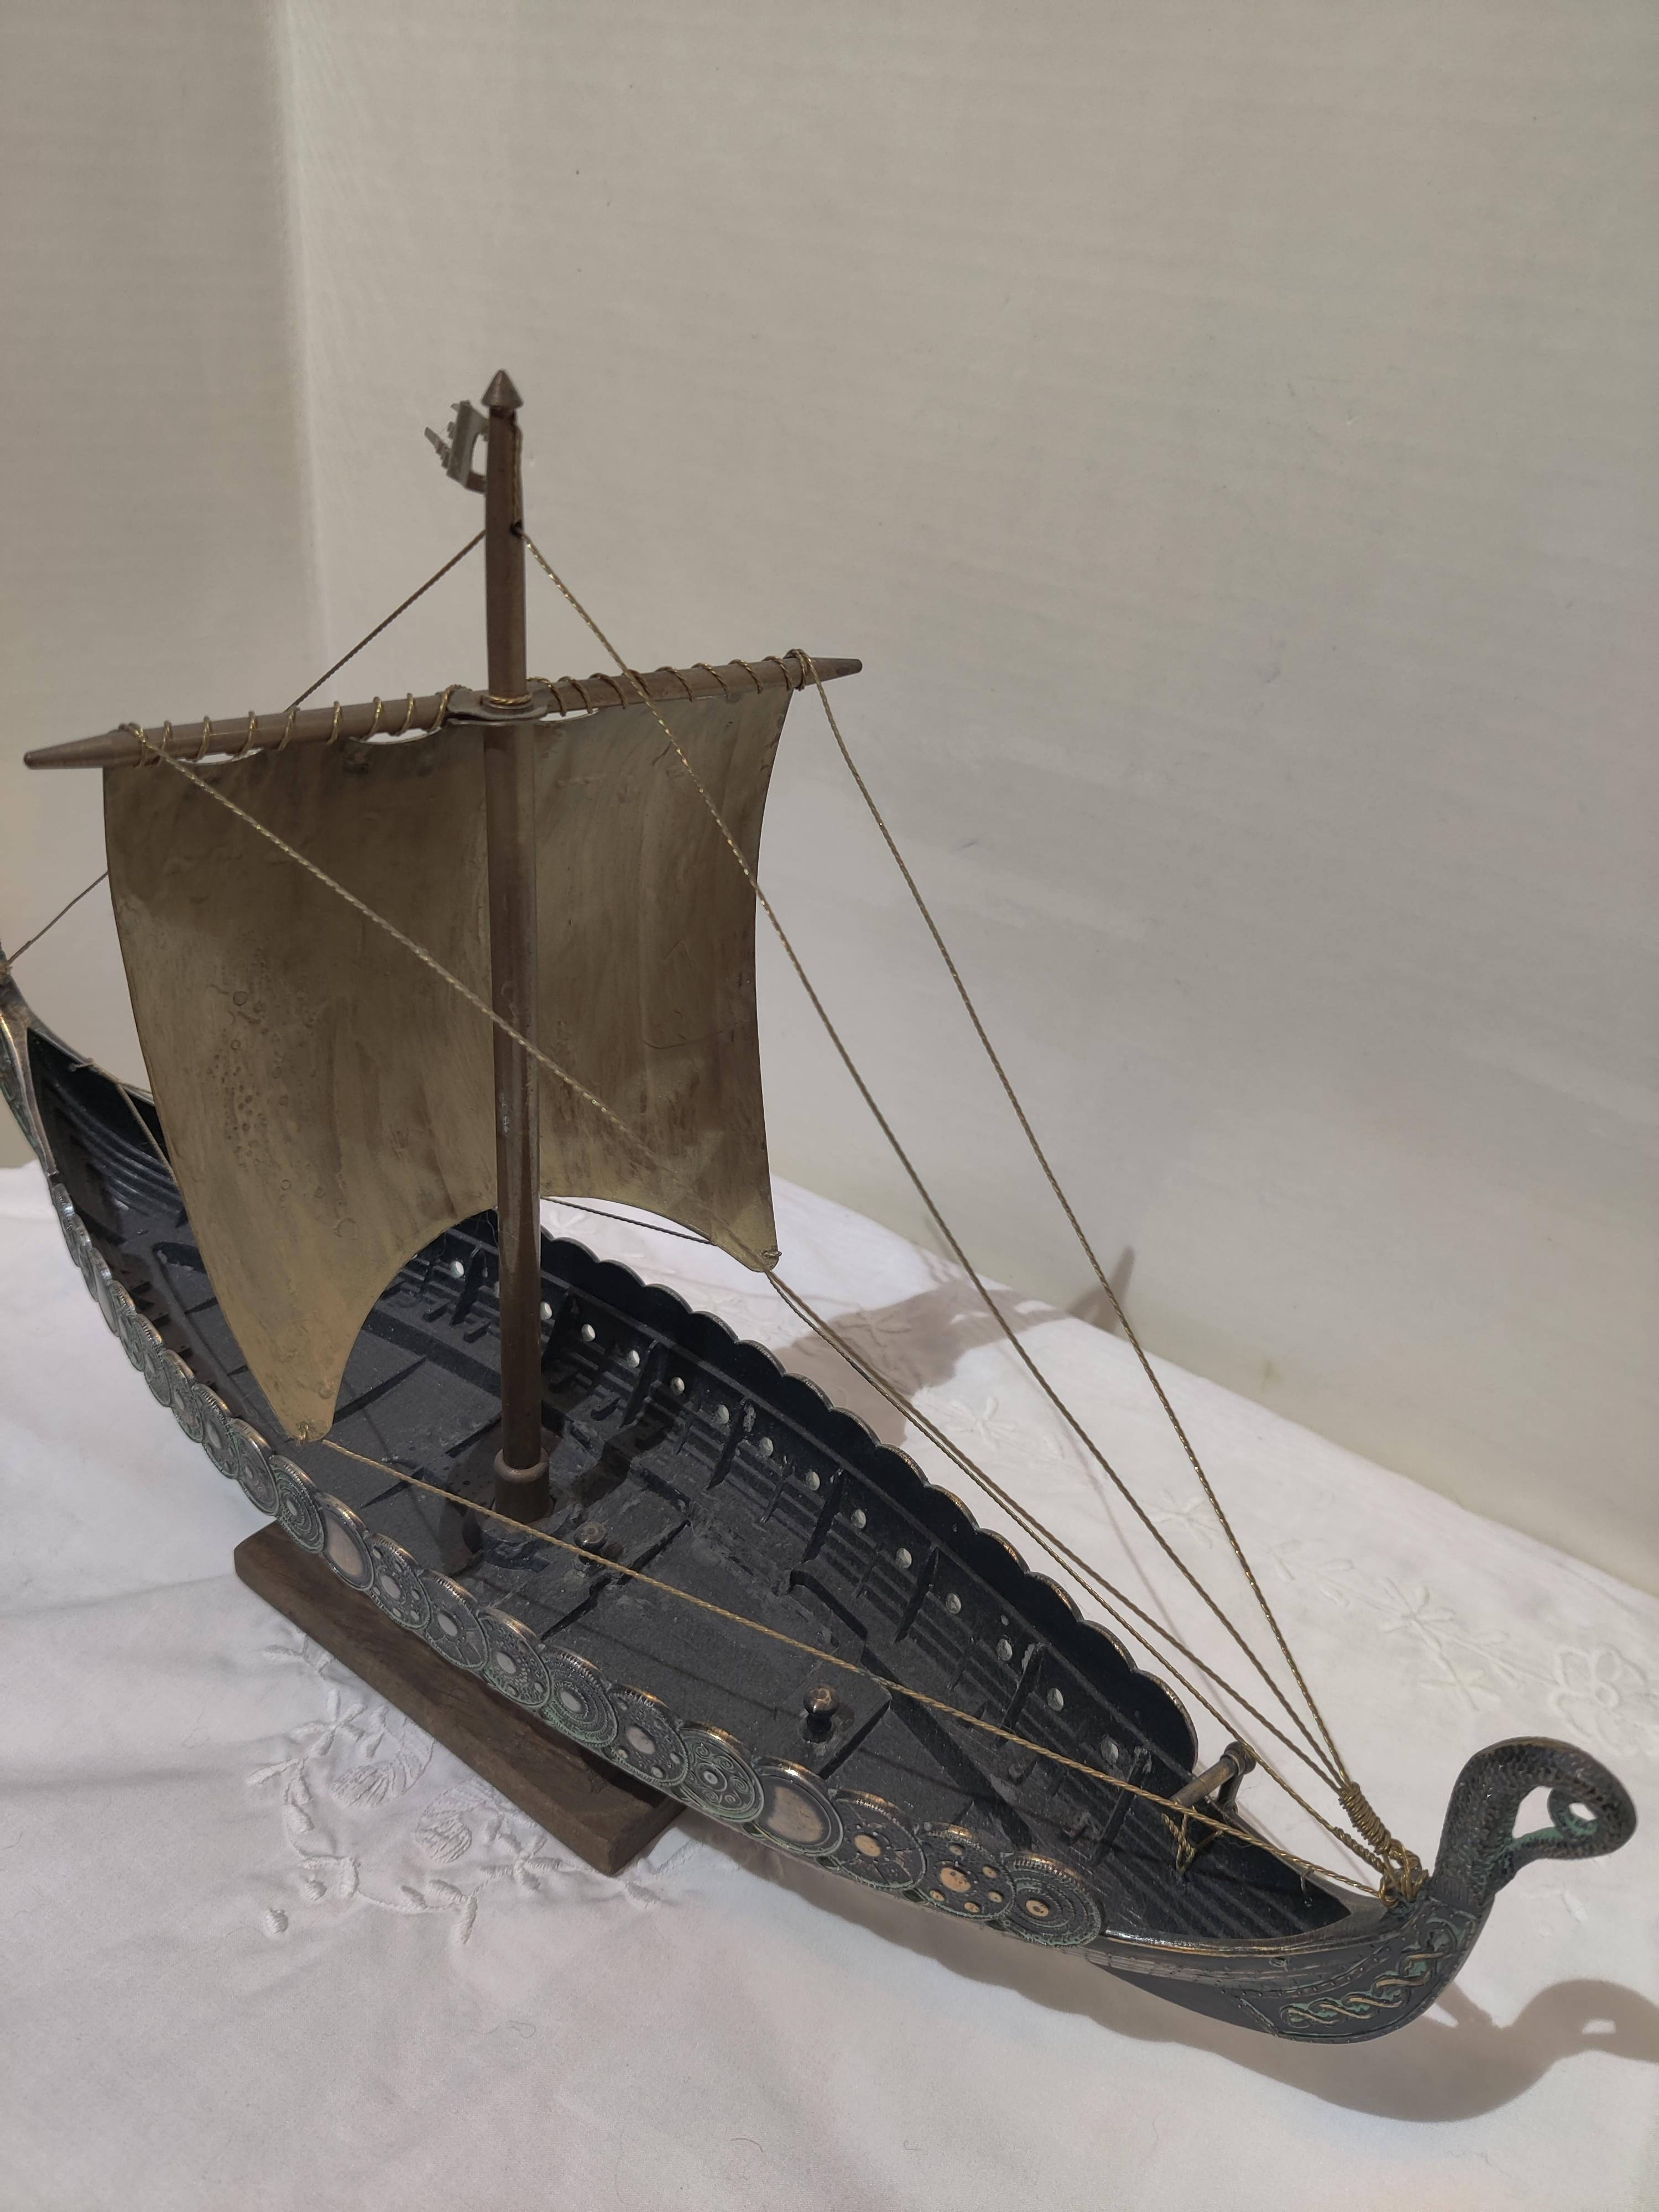 Edward Aagaard Model Viking Ship
Copper Sail
Handmade